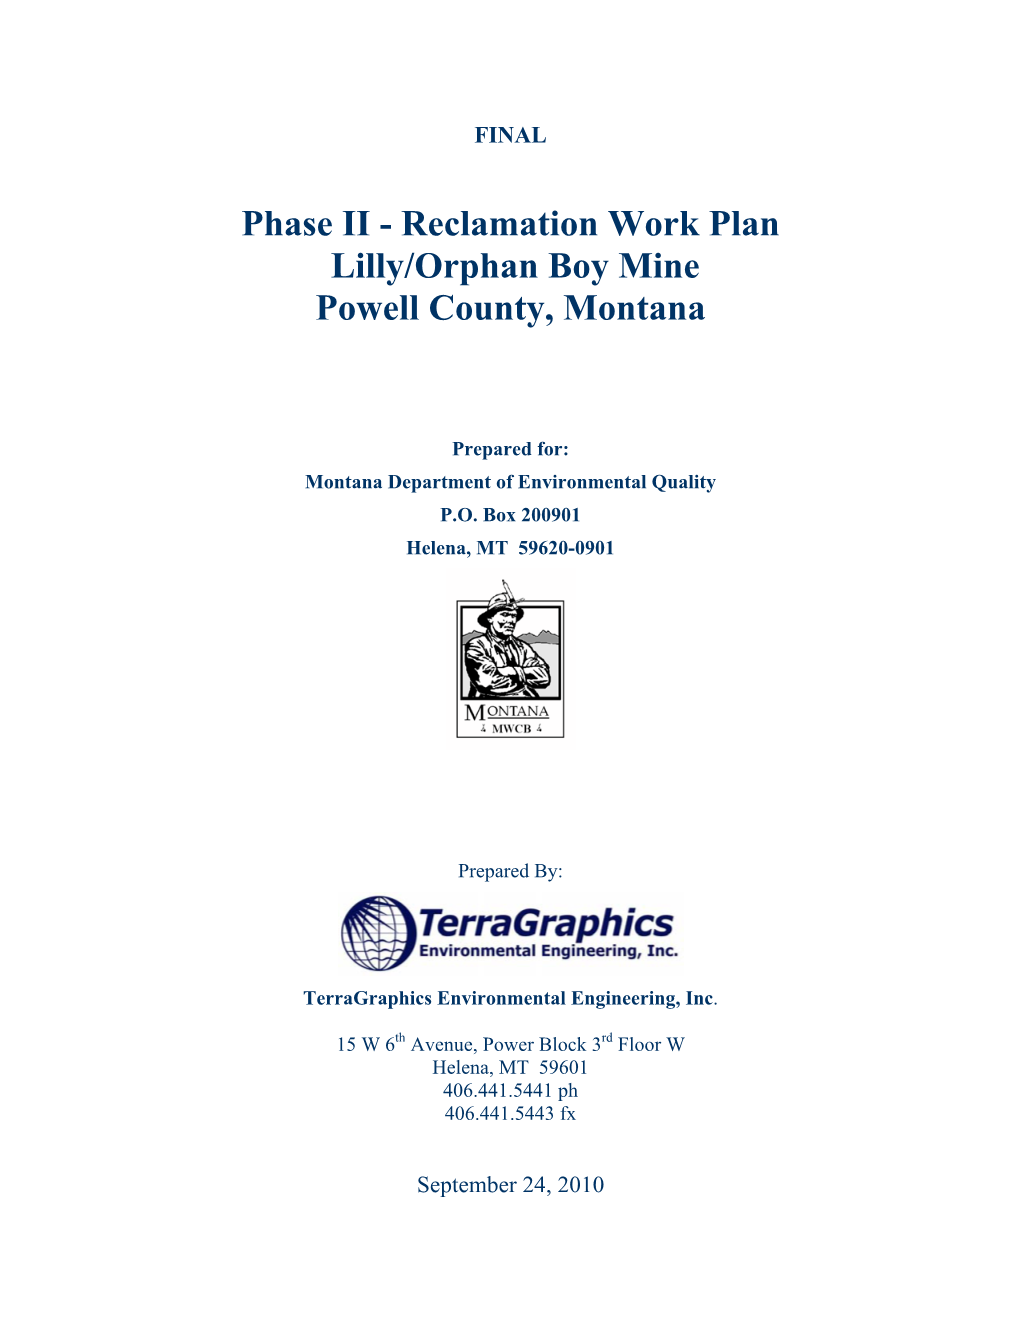 Reclamation Work Plan Lilly/Orphan Boy Mine Powell County, Montana